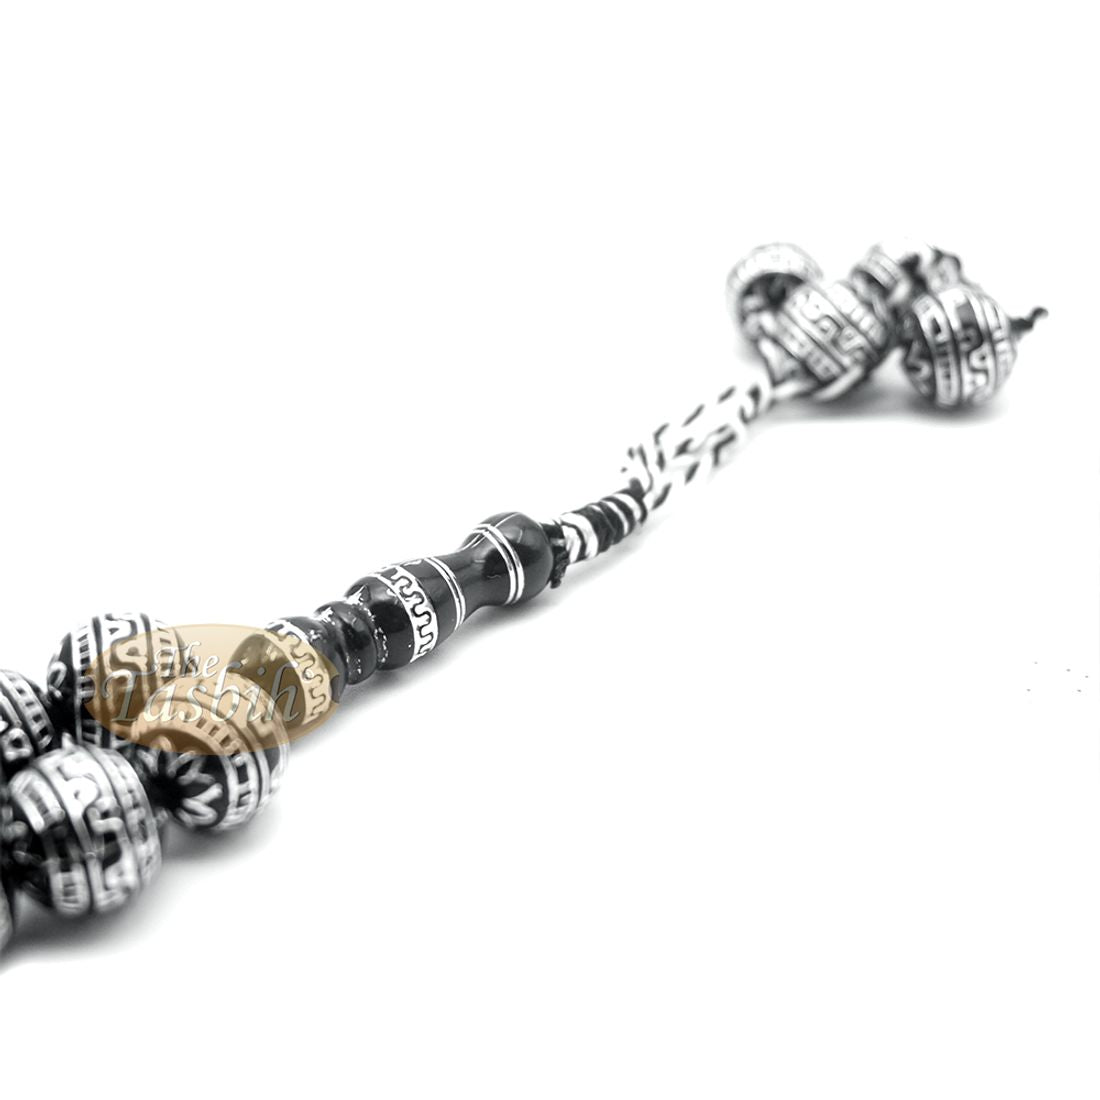 Large Sibha 13-mm Black & Metallic Silver Meandros Design Plastic Resin 33-bead Muslim Tasbih Prayer Beads